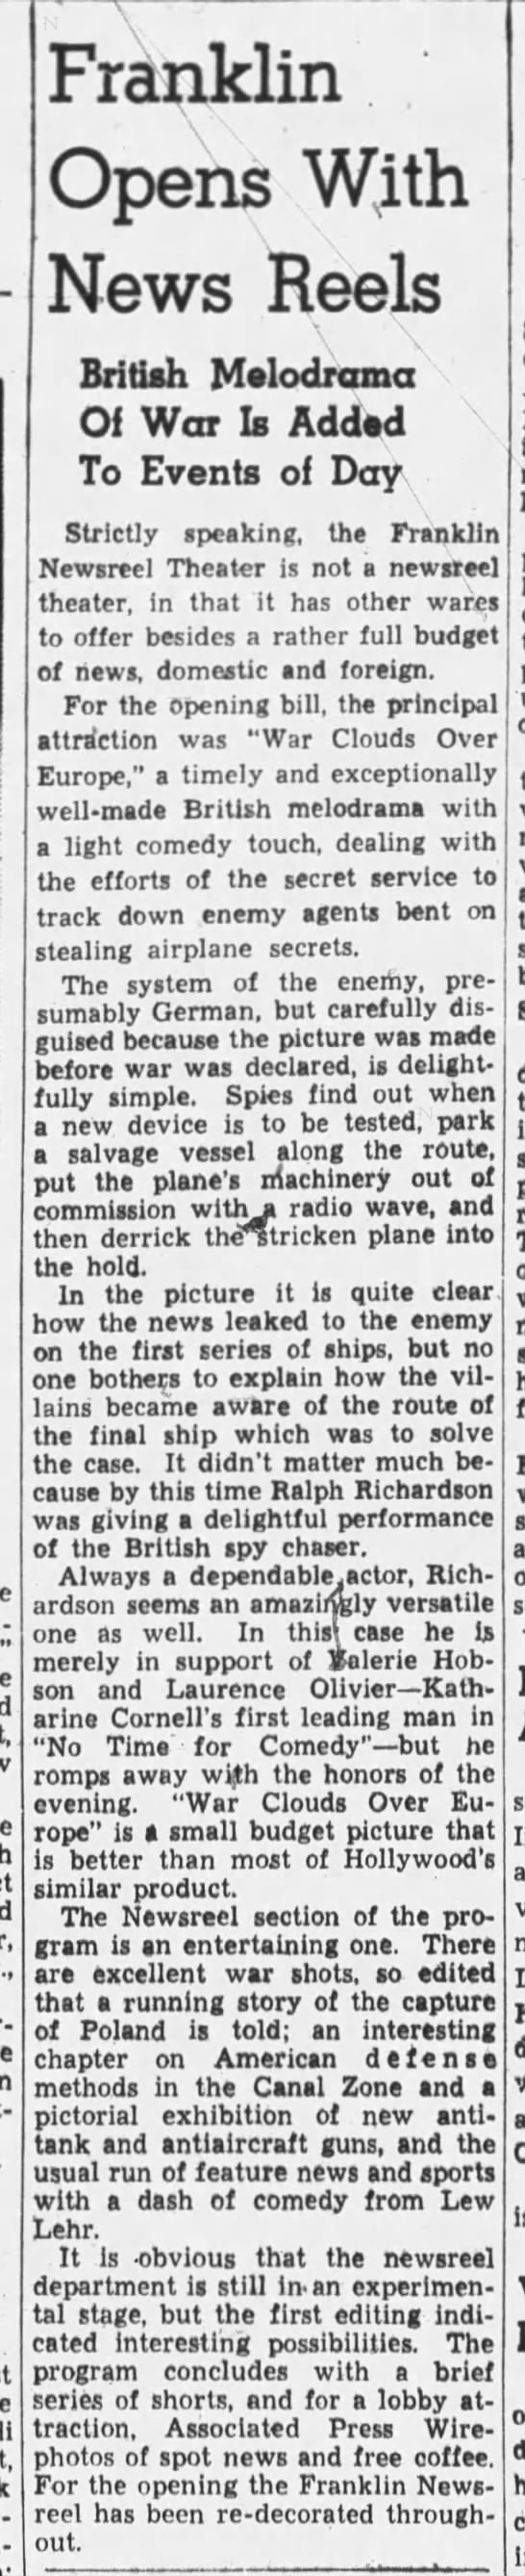 Franklin Opens with Newsreels - Oakland Tribune October 23, 1939 - 